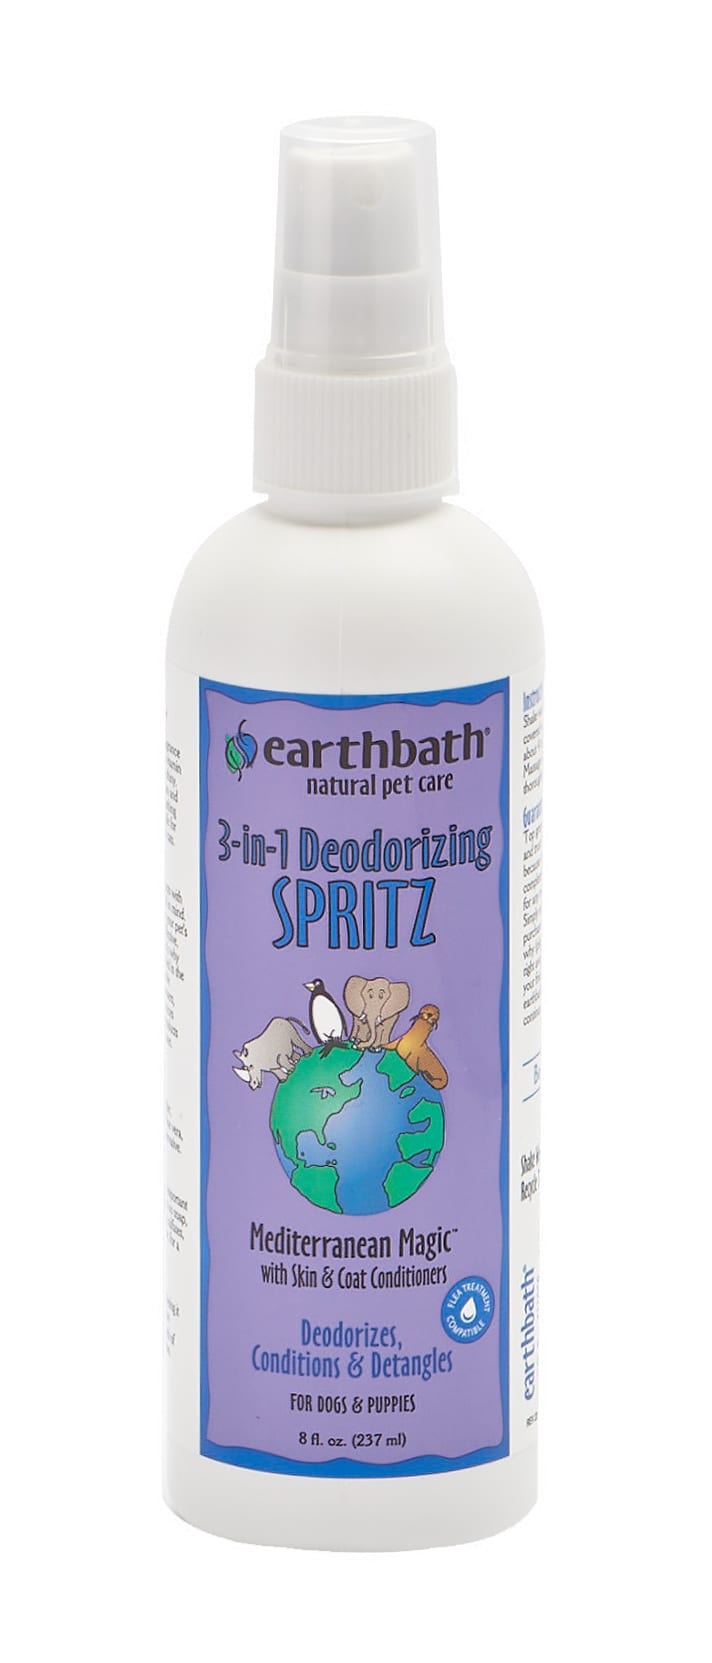 Earthbath 3 in 1 Deodorizing Spritz - Mediterranean Magic with Skin & Coat Conditioners 8oz